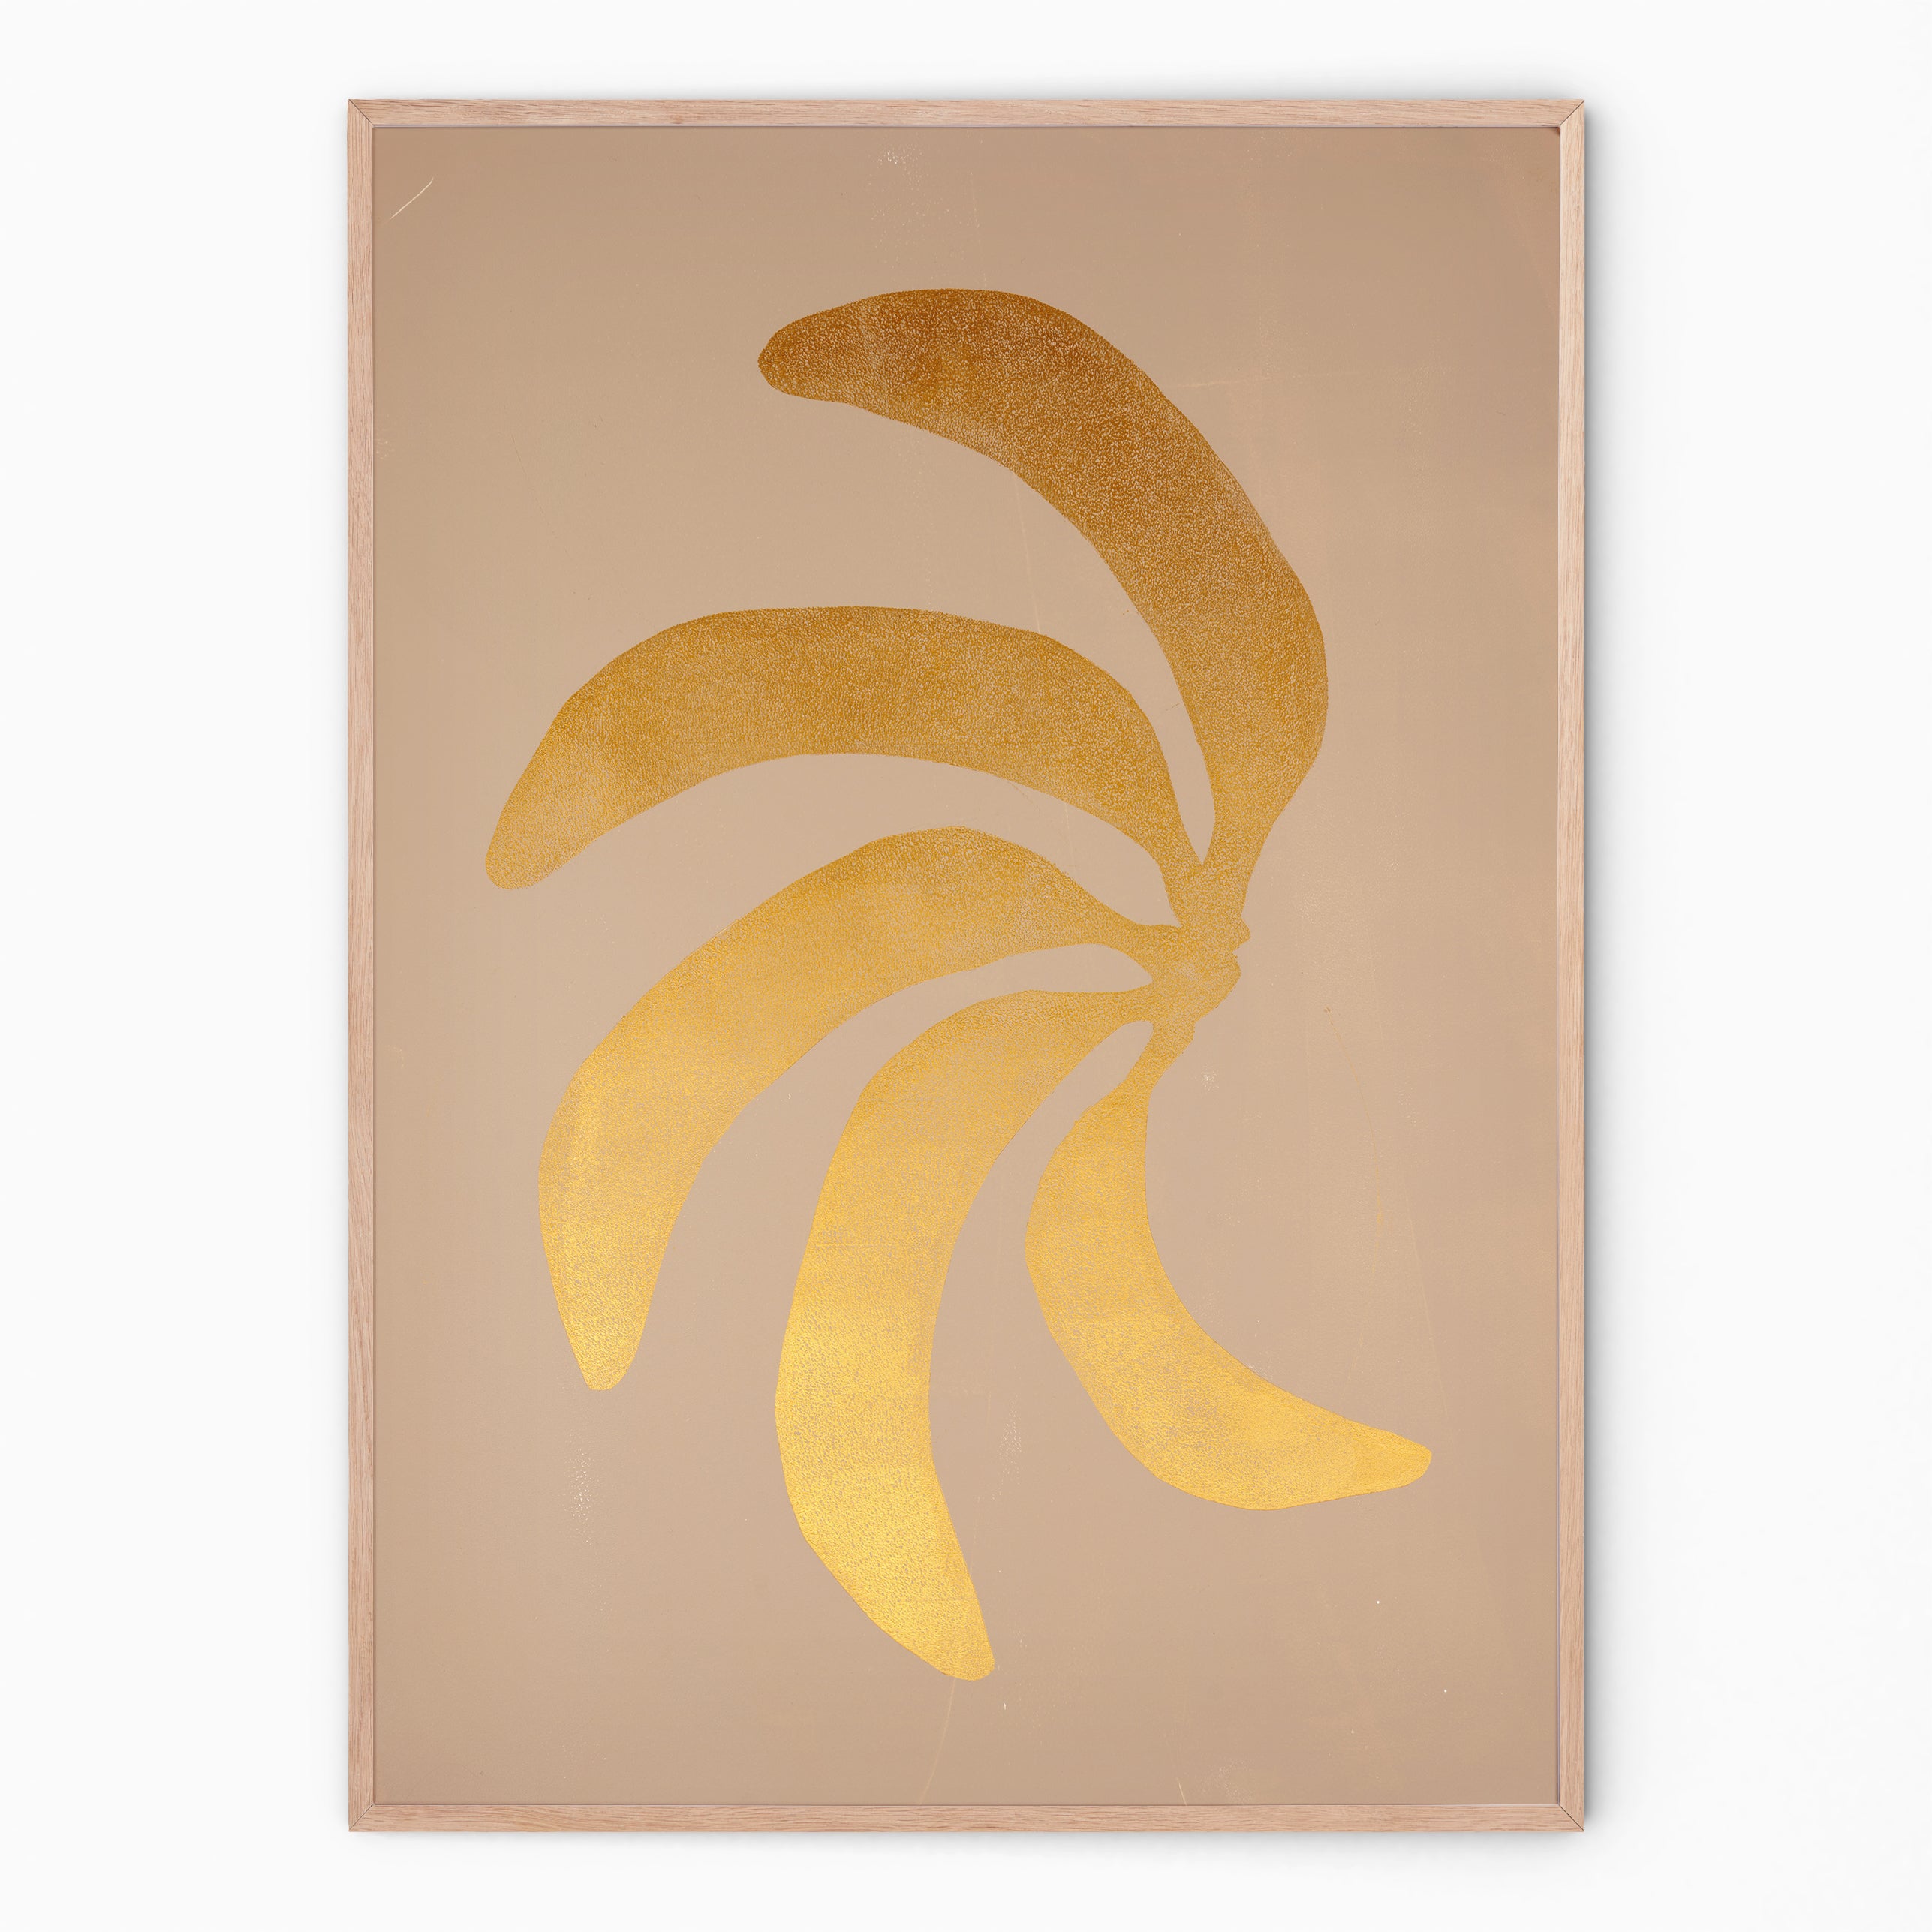 Warm grey & gold wall art for a dining room | handmade art print | Enkel Art Studio